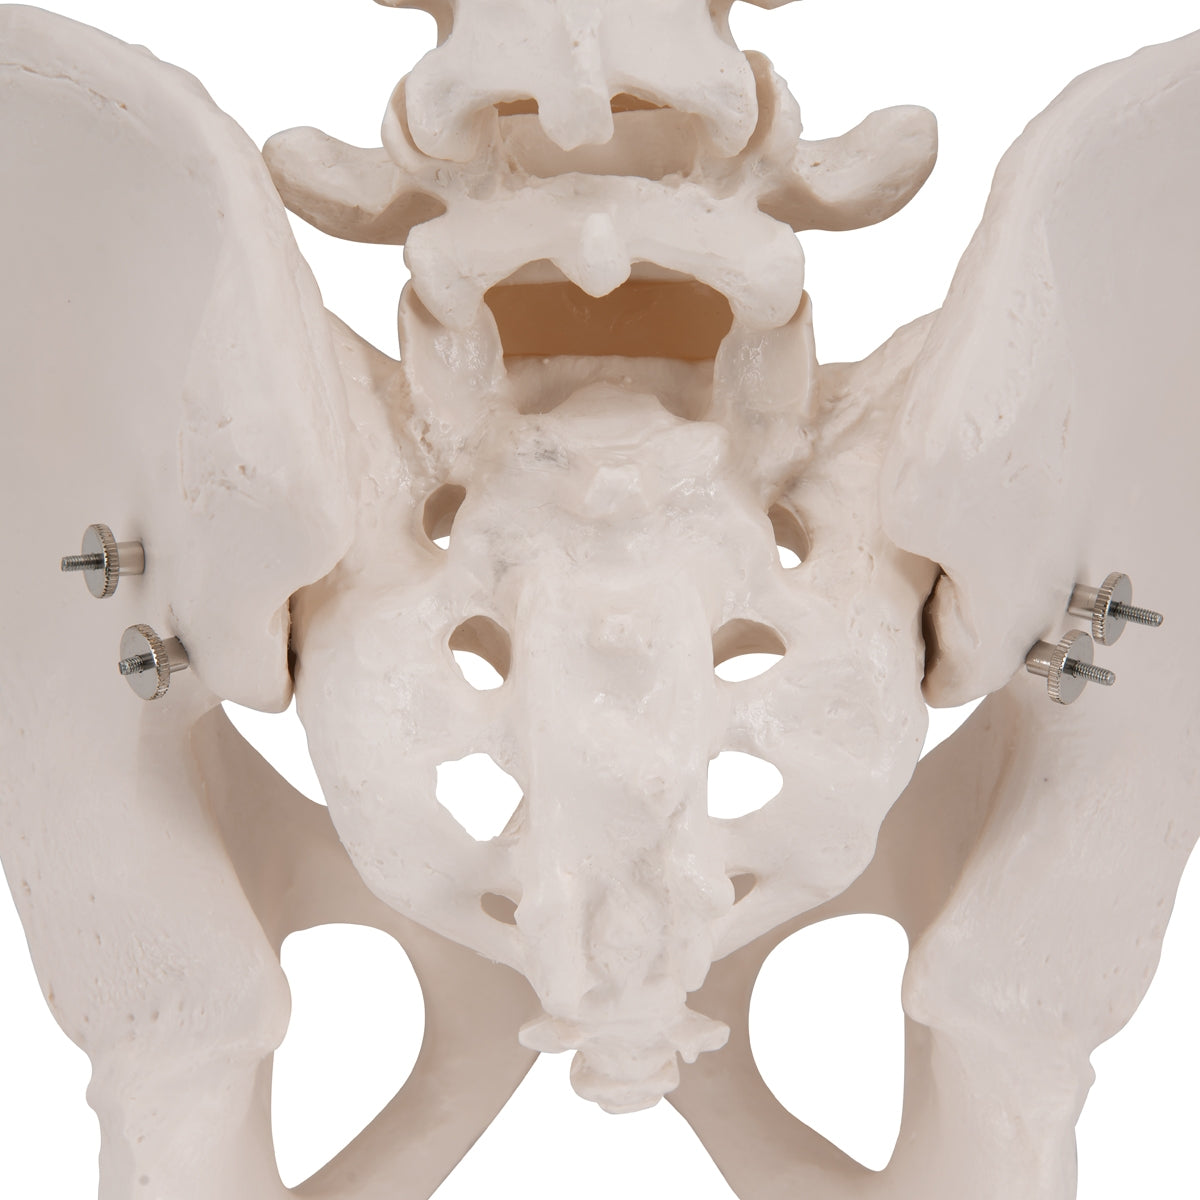 Human Male Pelvis Skeleton Model